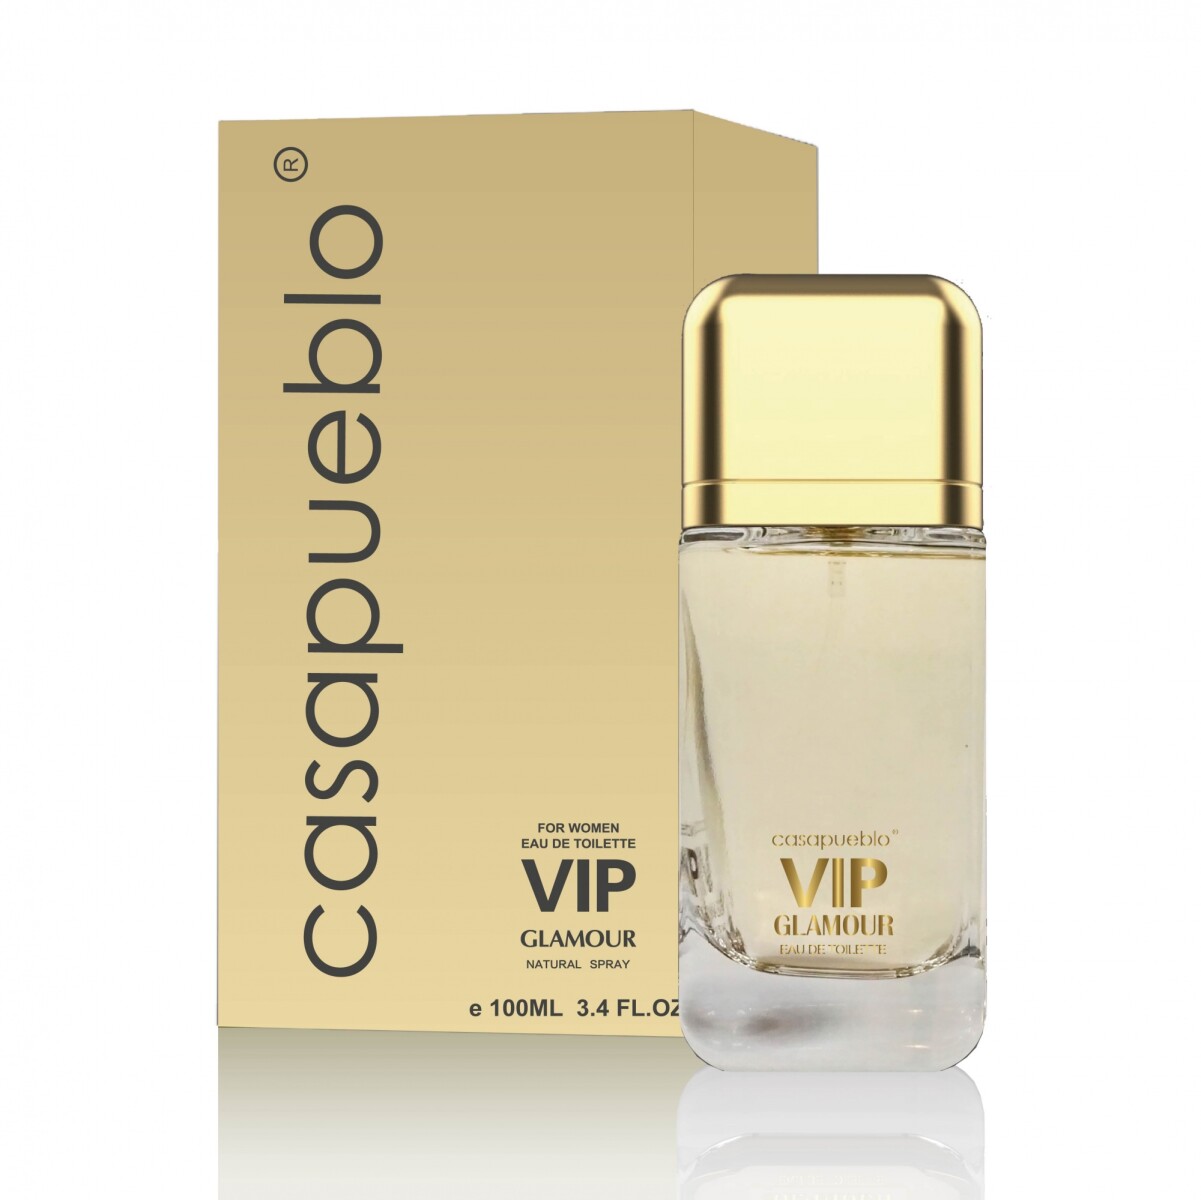 Perfume Casapueblo Vip Glamour 100ML Woman - 001 